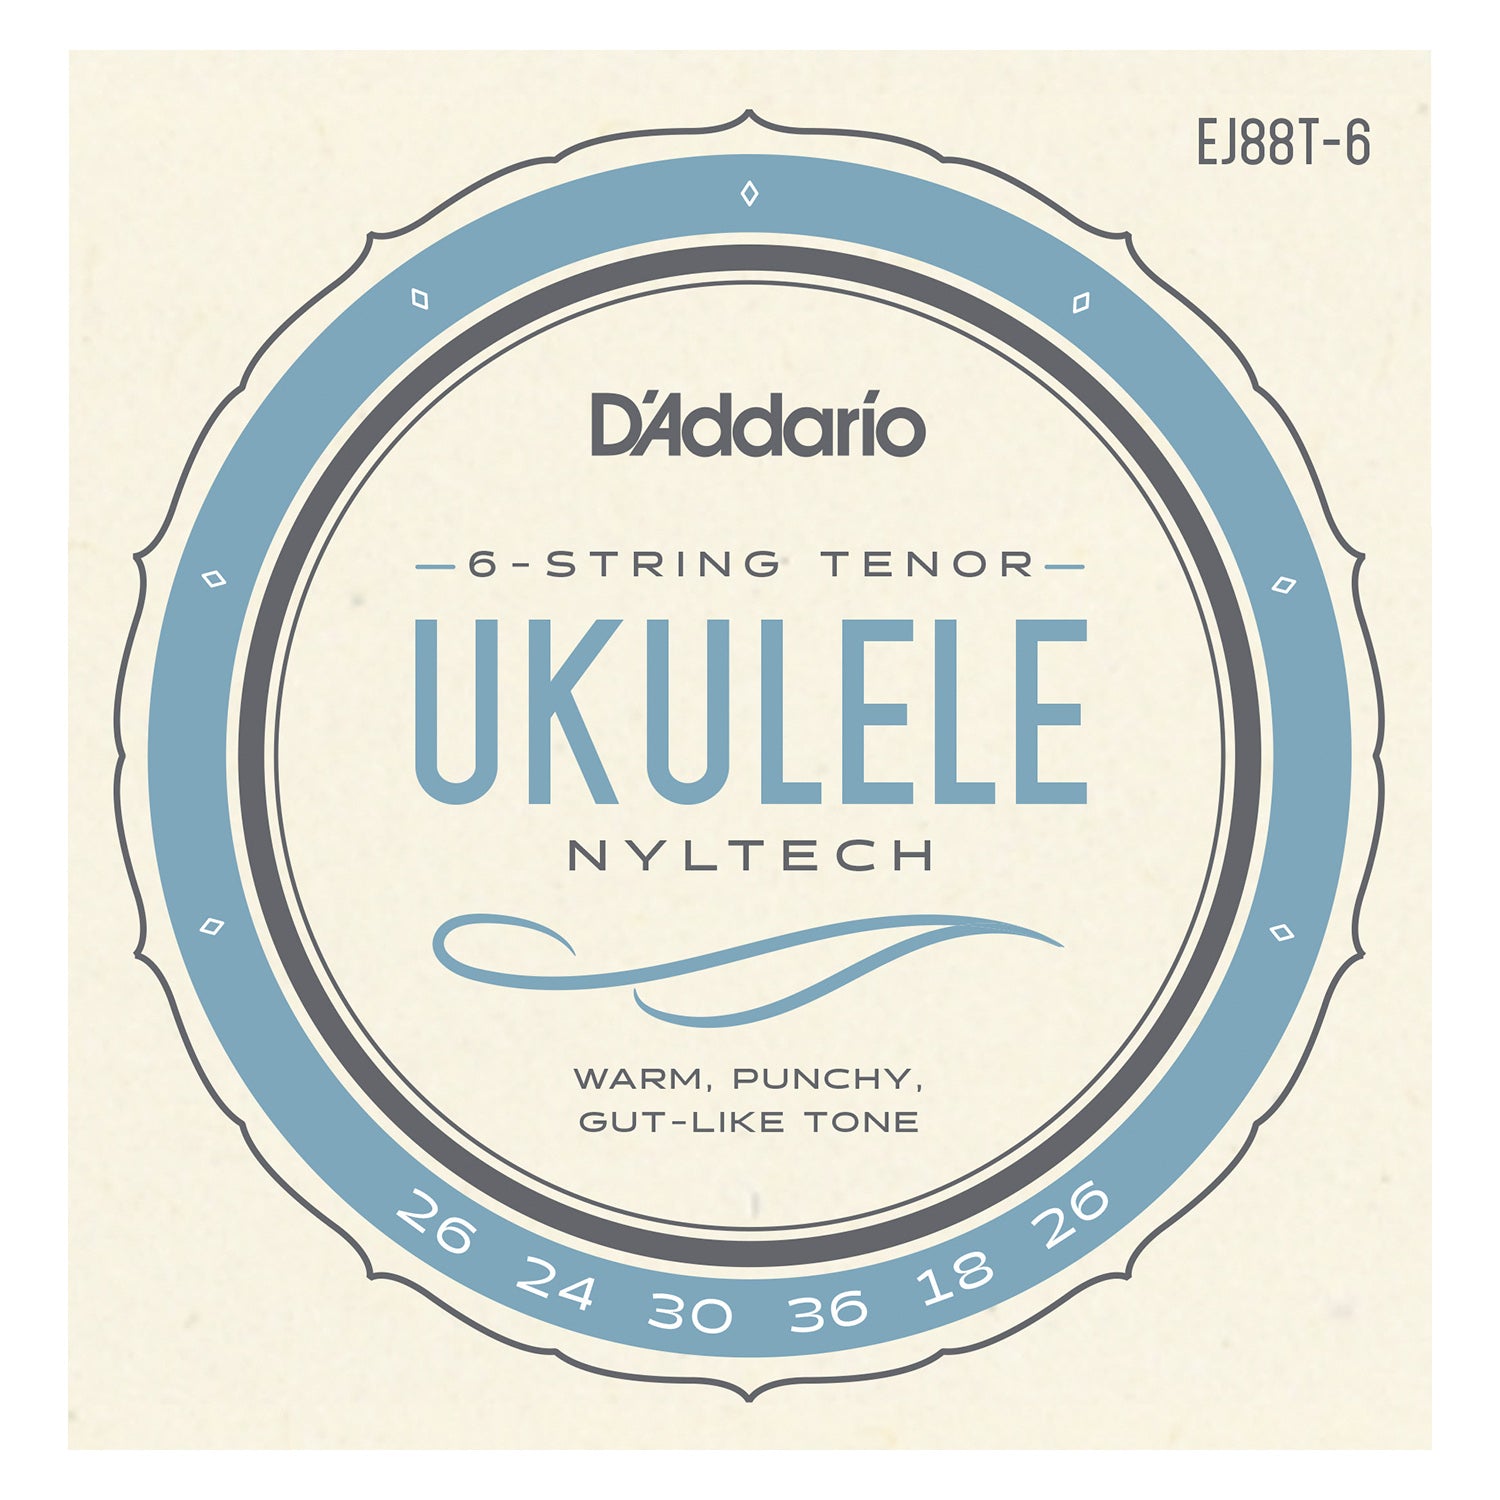 D'Addario EJ88T-6 Nyltech Ukulele, 6-String Tenor